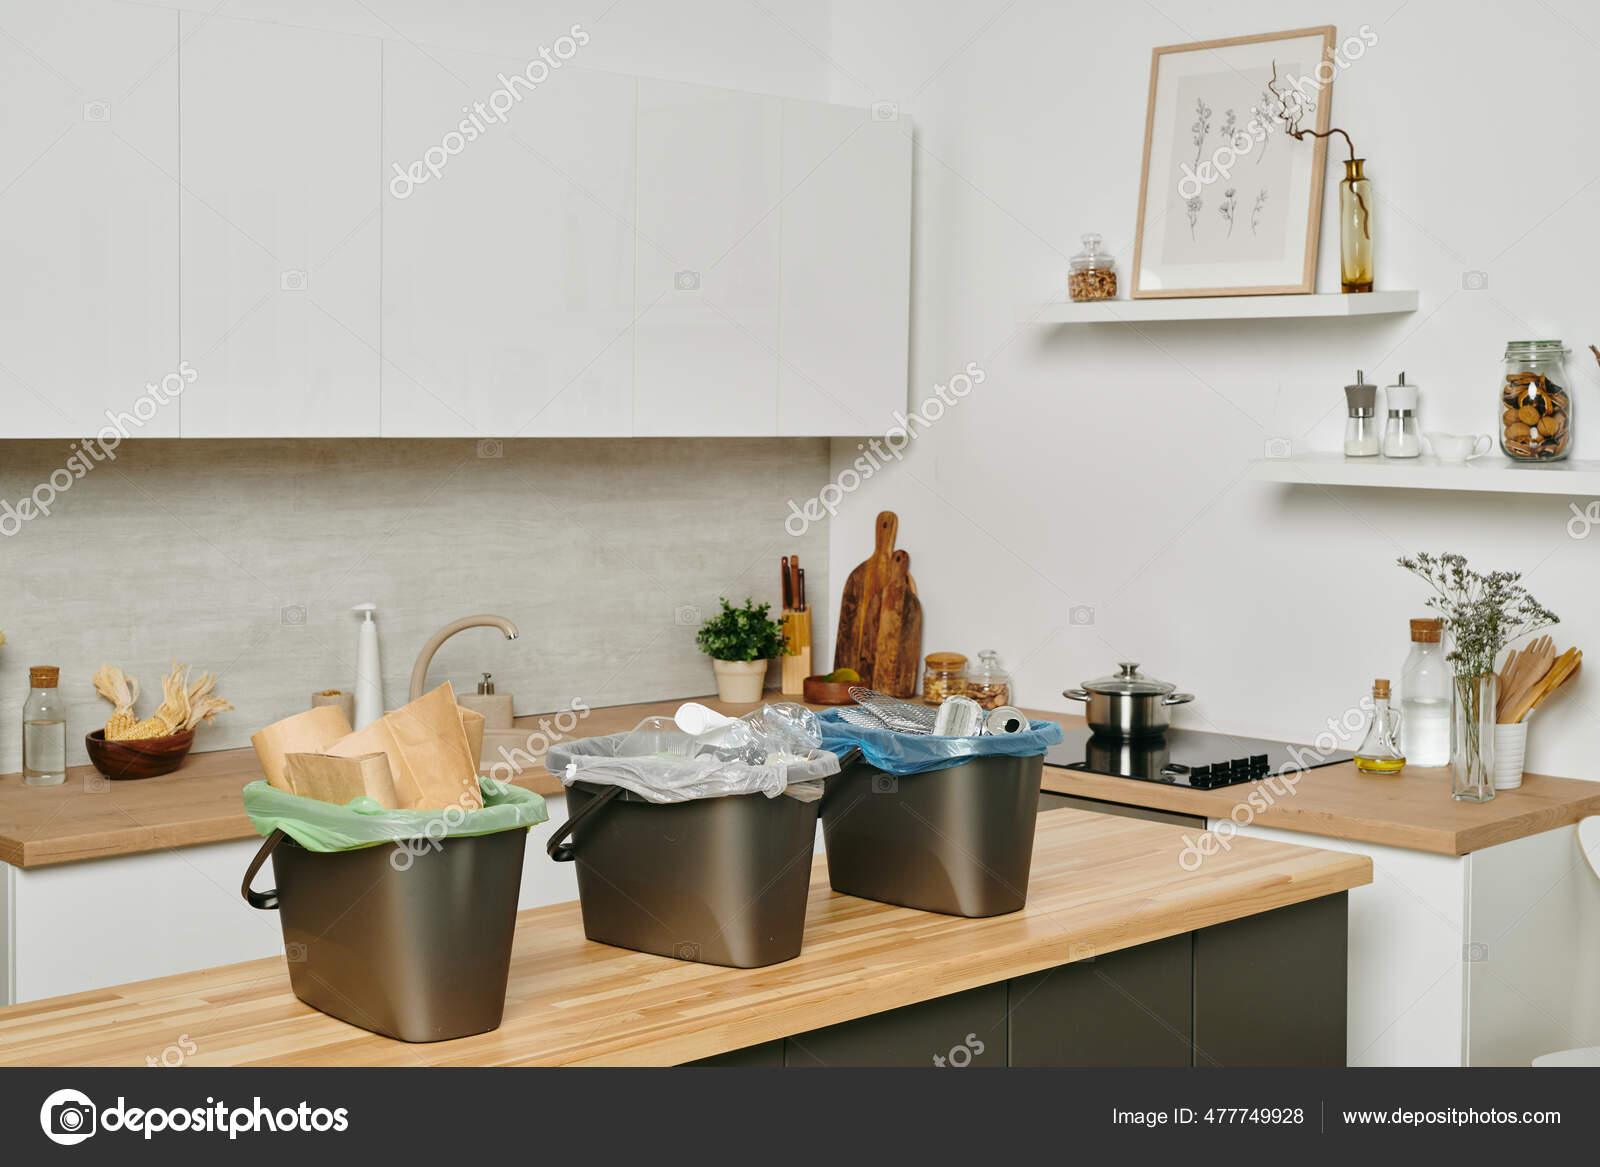 Stylish kitchen counter with set of houseware Stock Photo